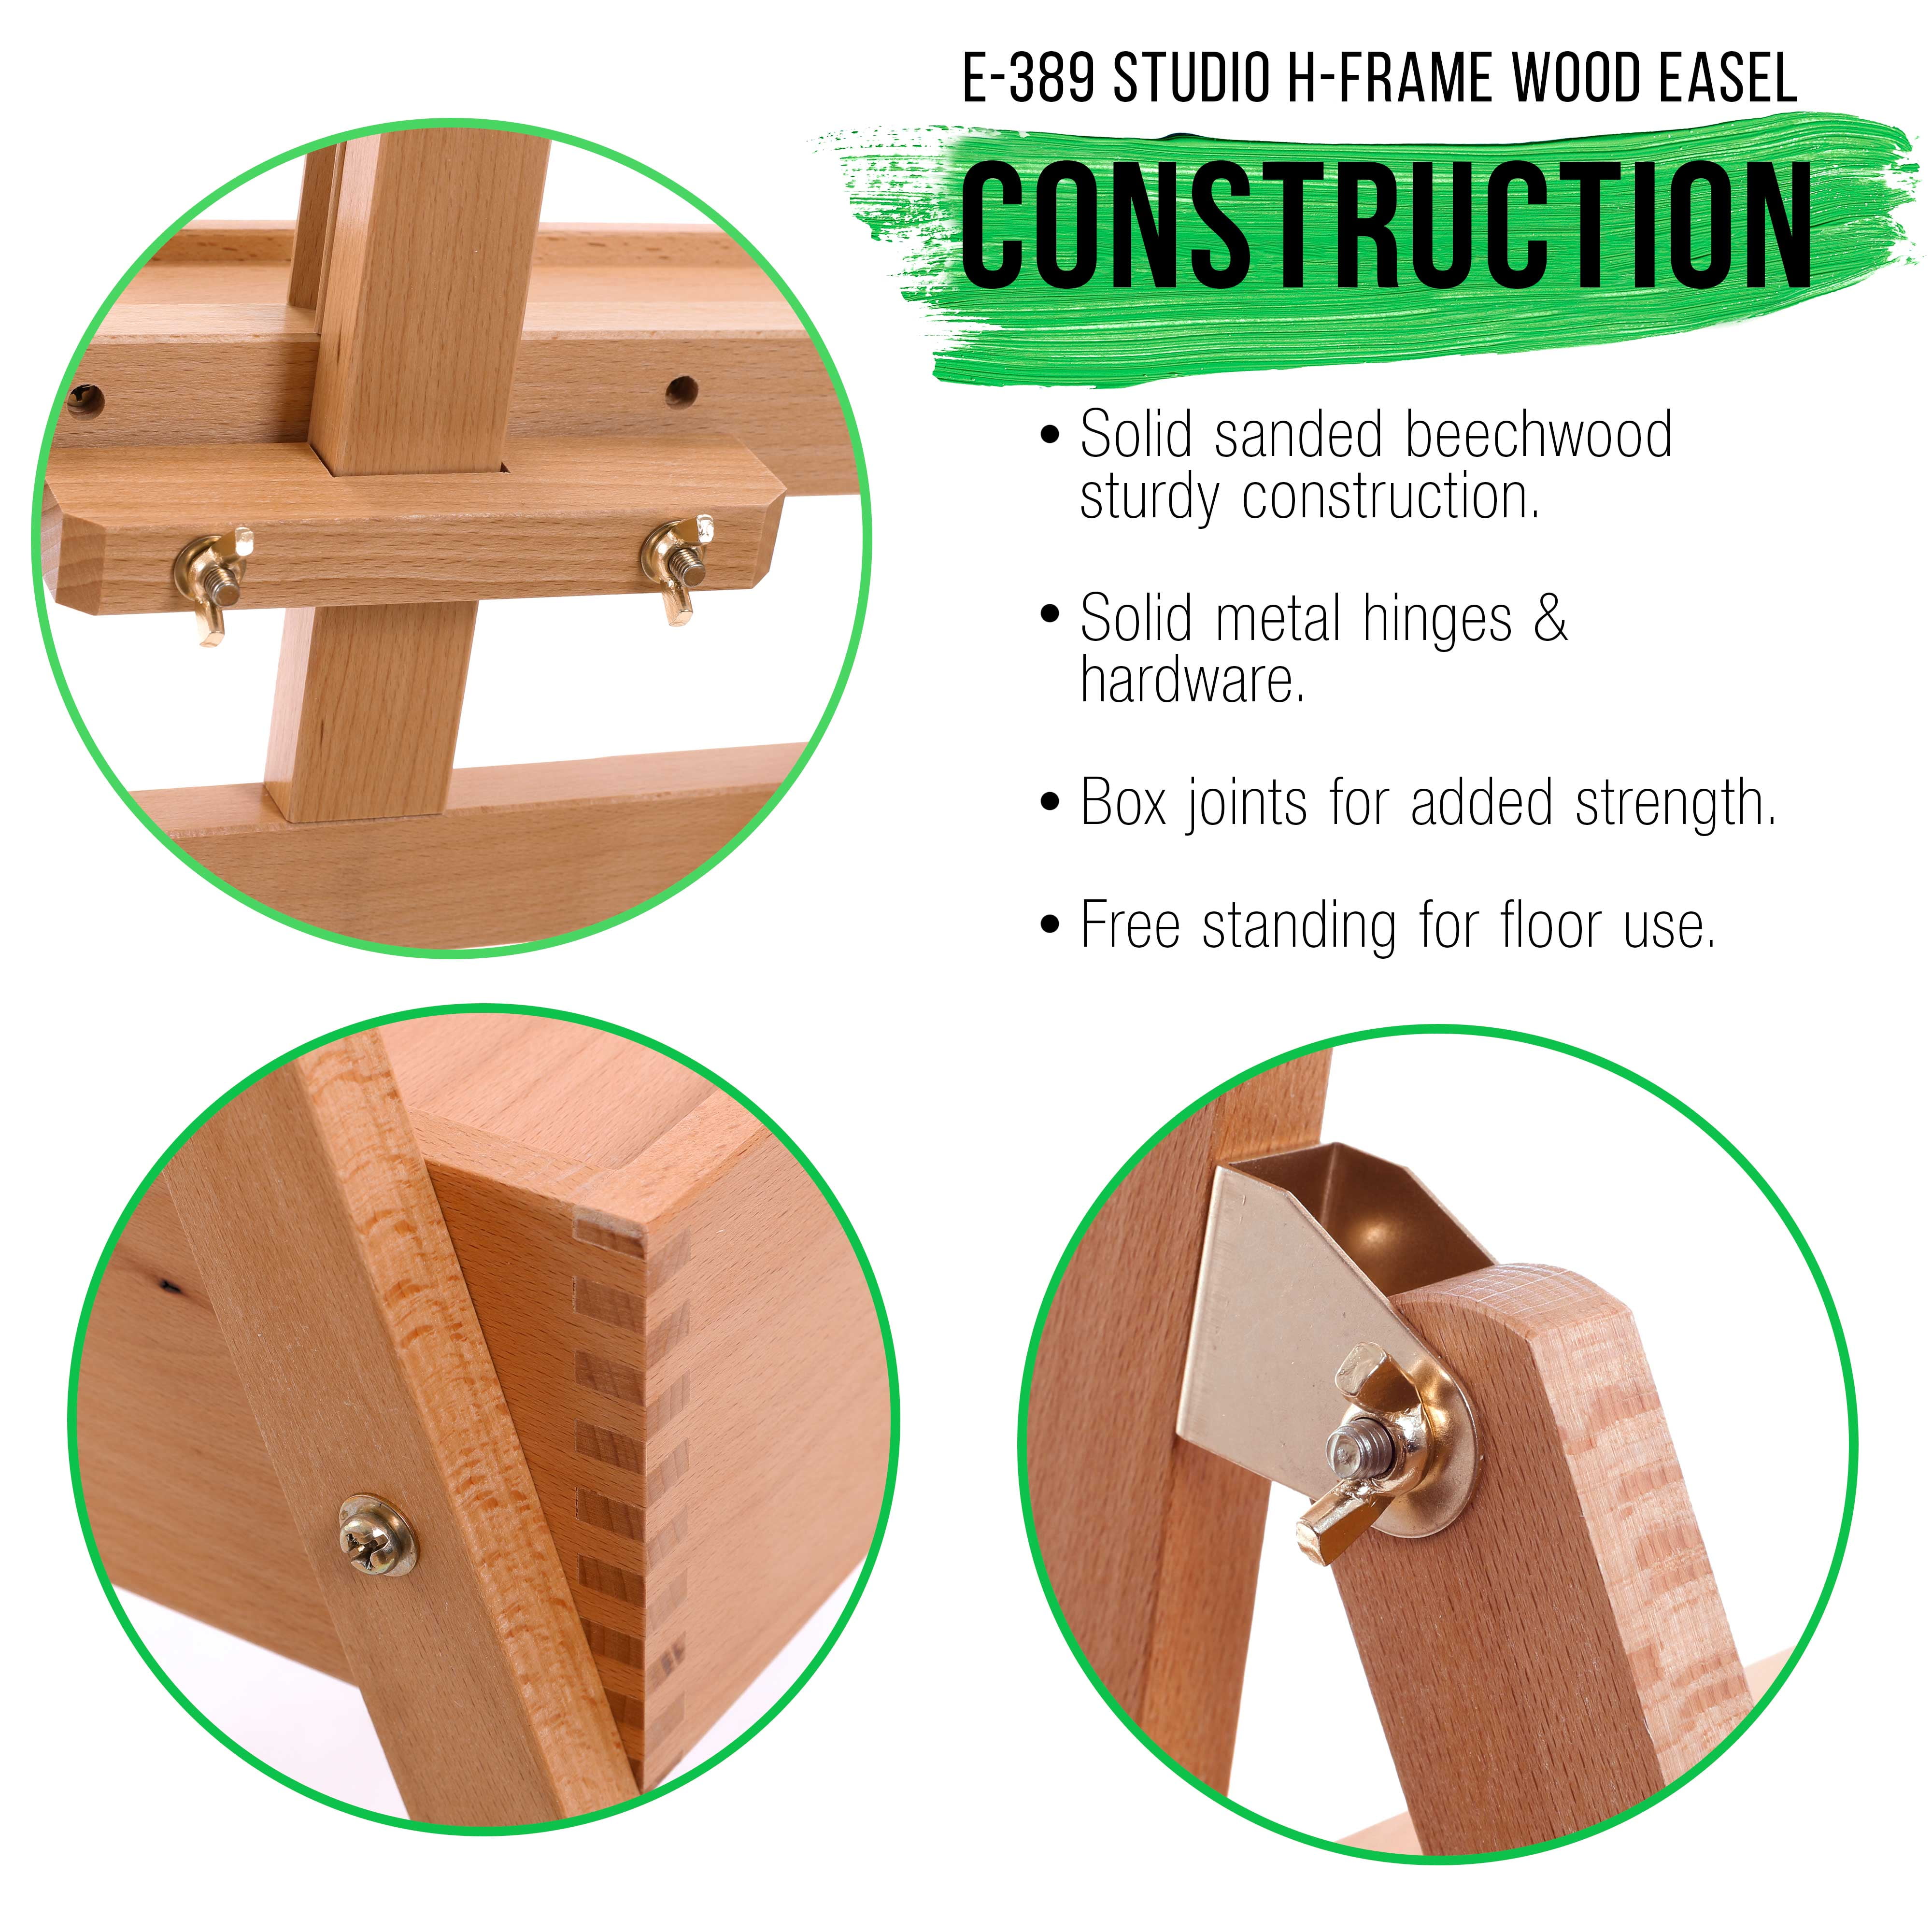 U.S. Art Supply Master Multi-Function Studio Wooden Easel, H-Frame